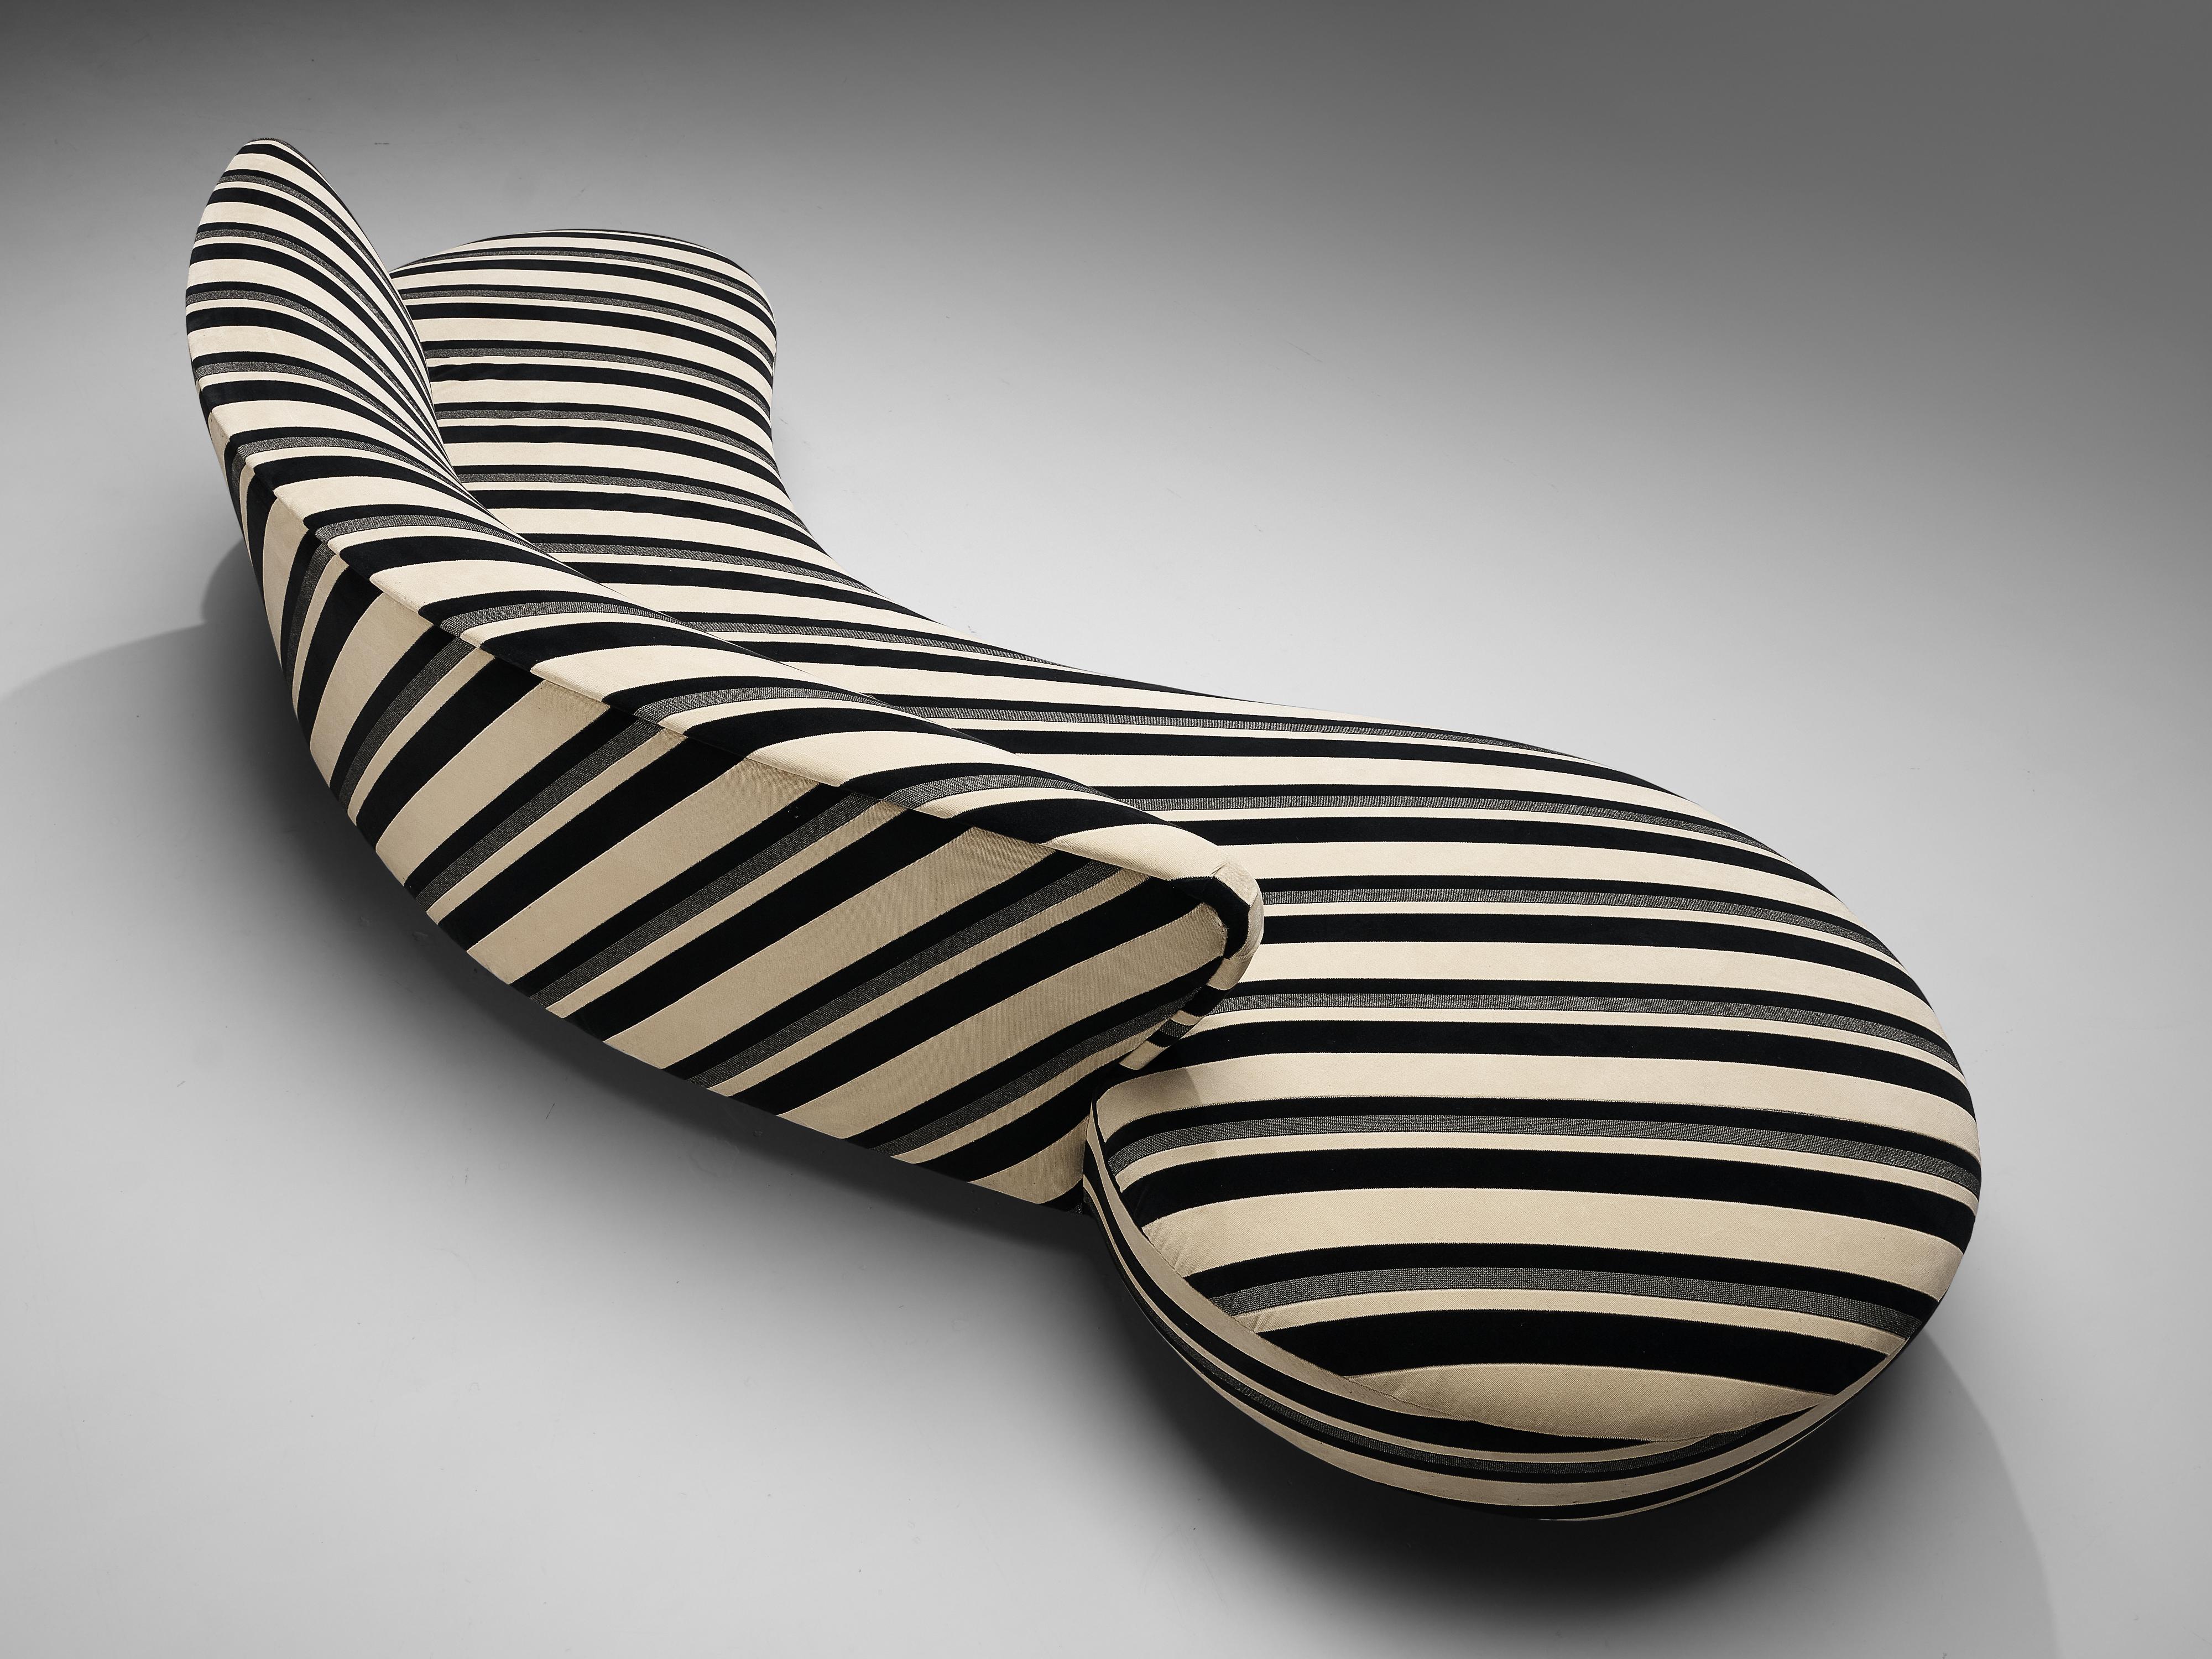 Late 20th Century Iconic Vladimir Kagan 'Serpentine' Sofa in Striped Upholstery